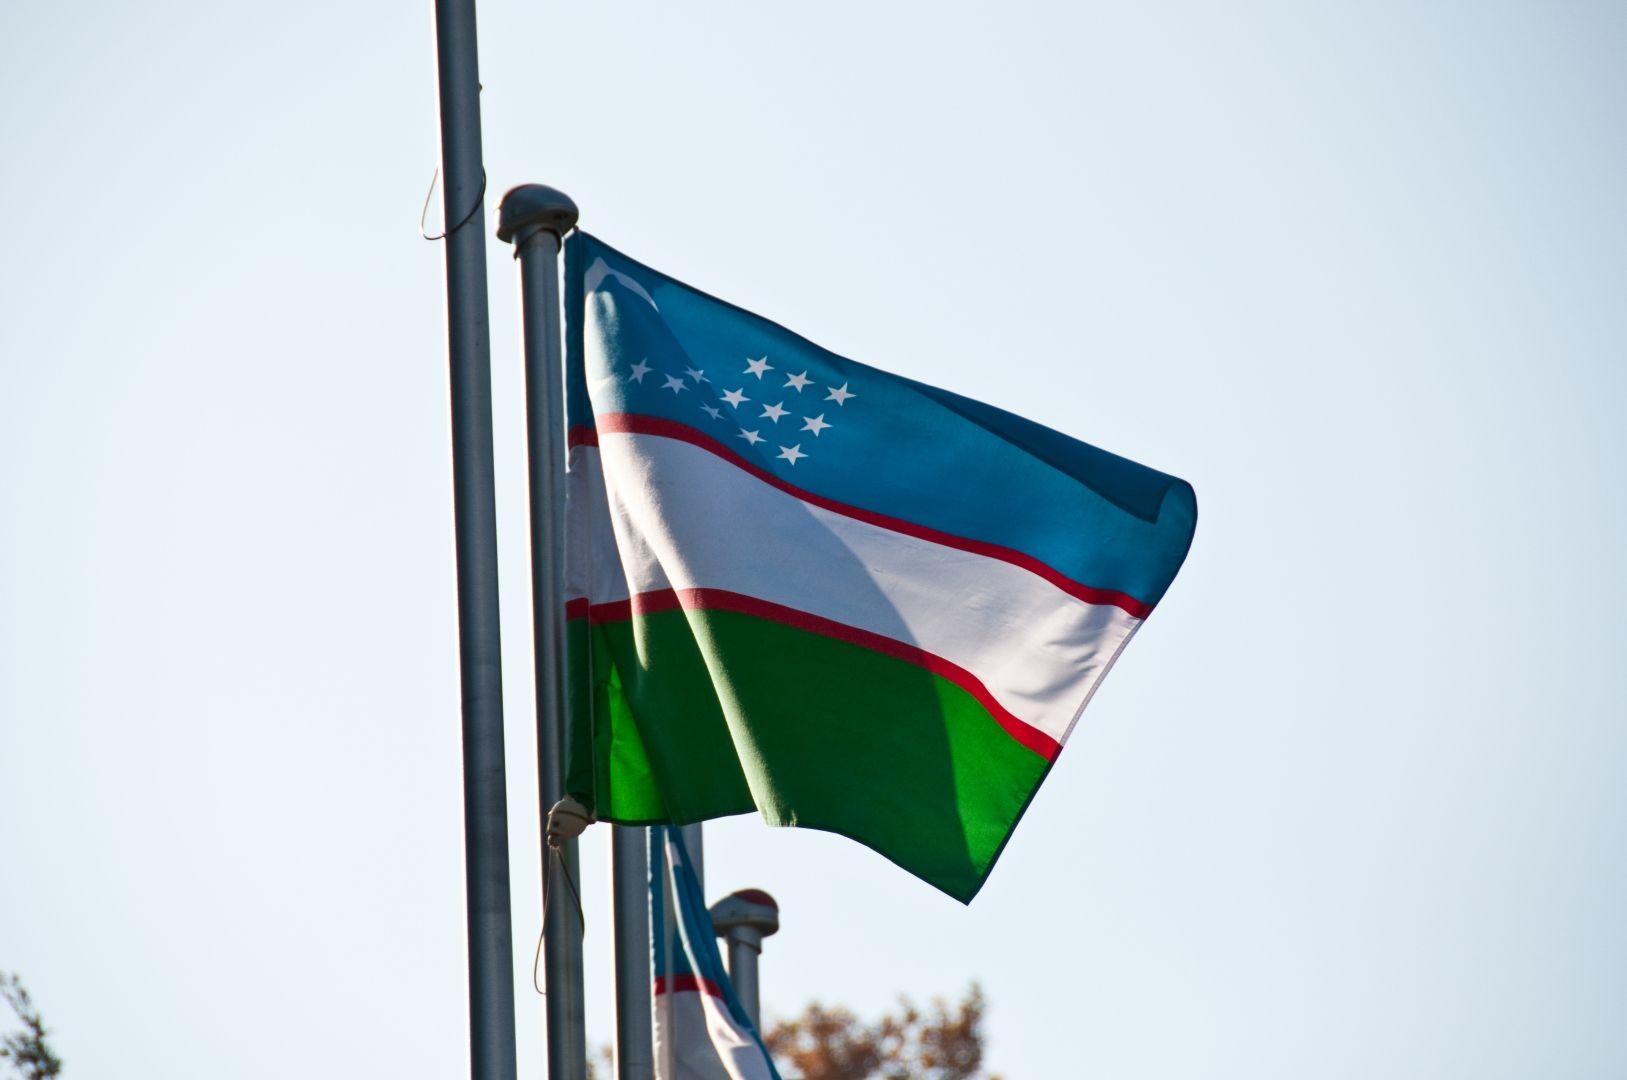 Узбекистан вступил в Межпарламентскую ассамблею СНГ